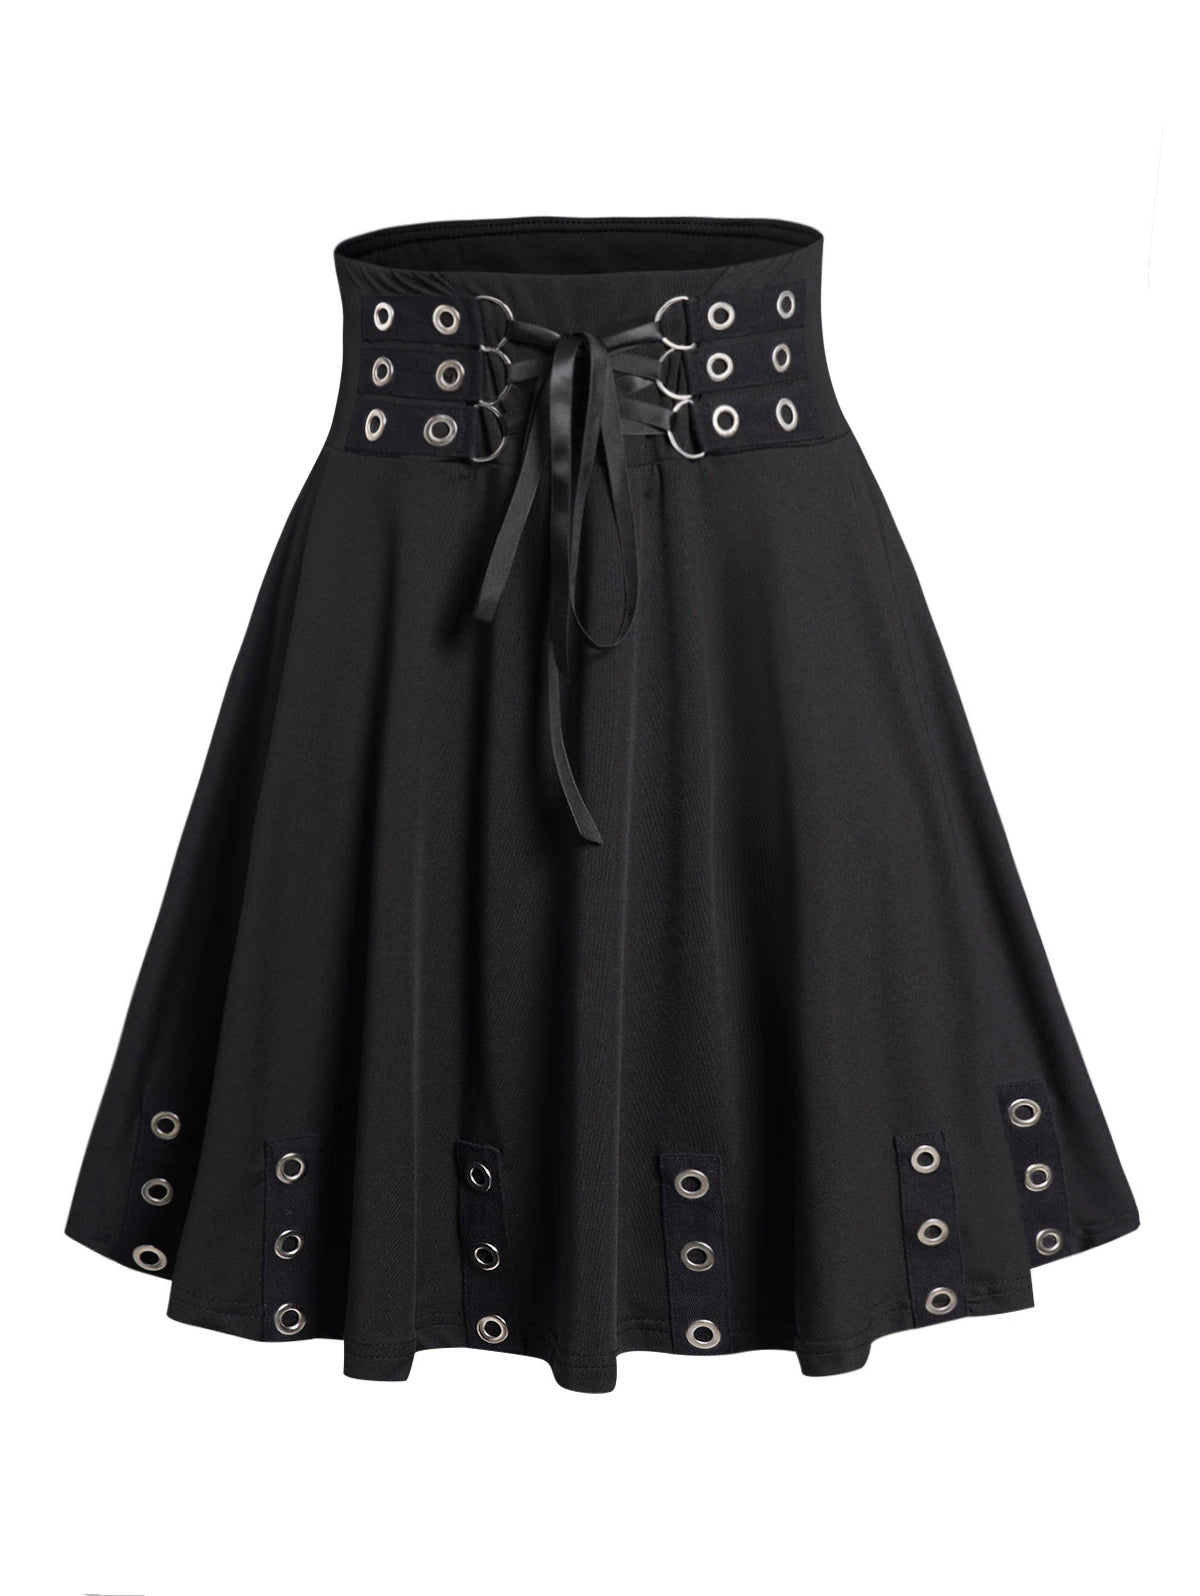 Mini Lace Up Gothic Skirt